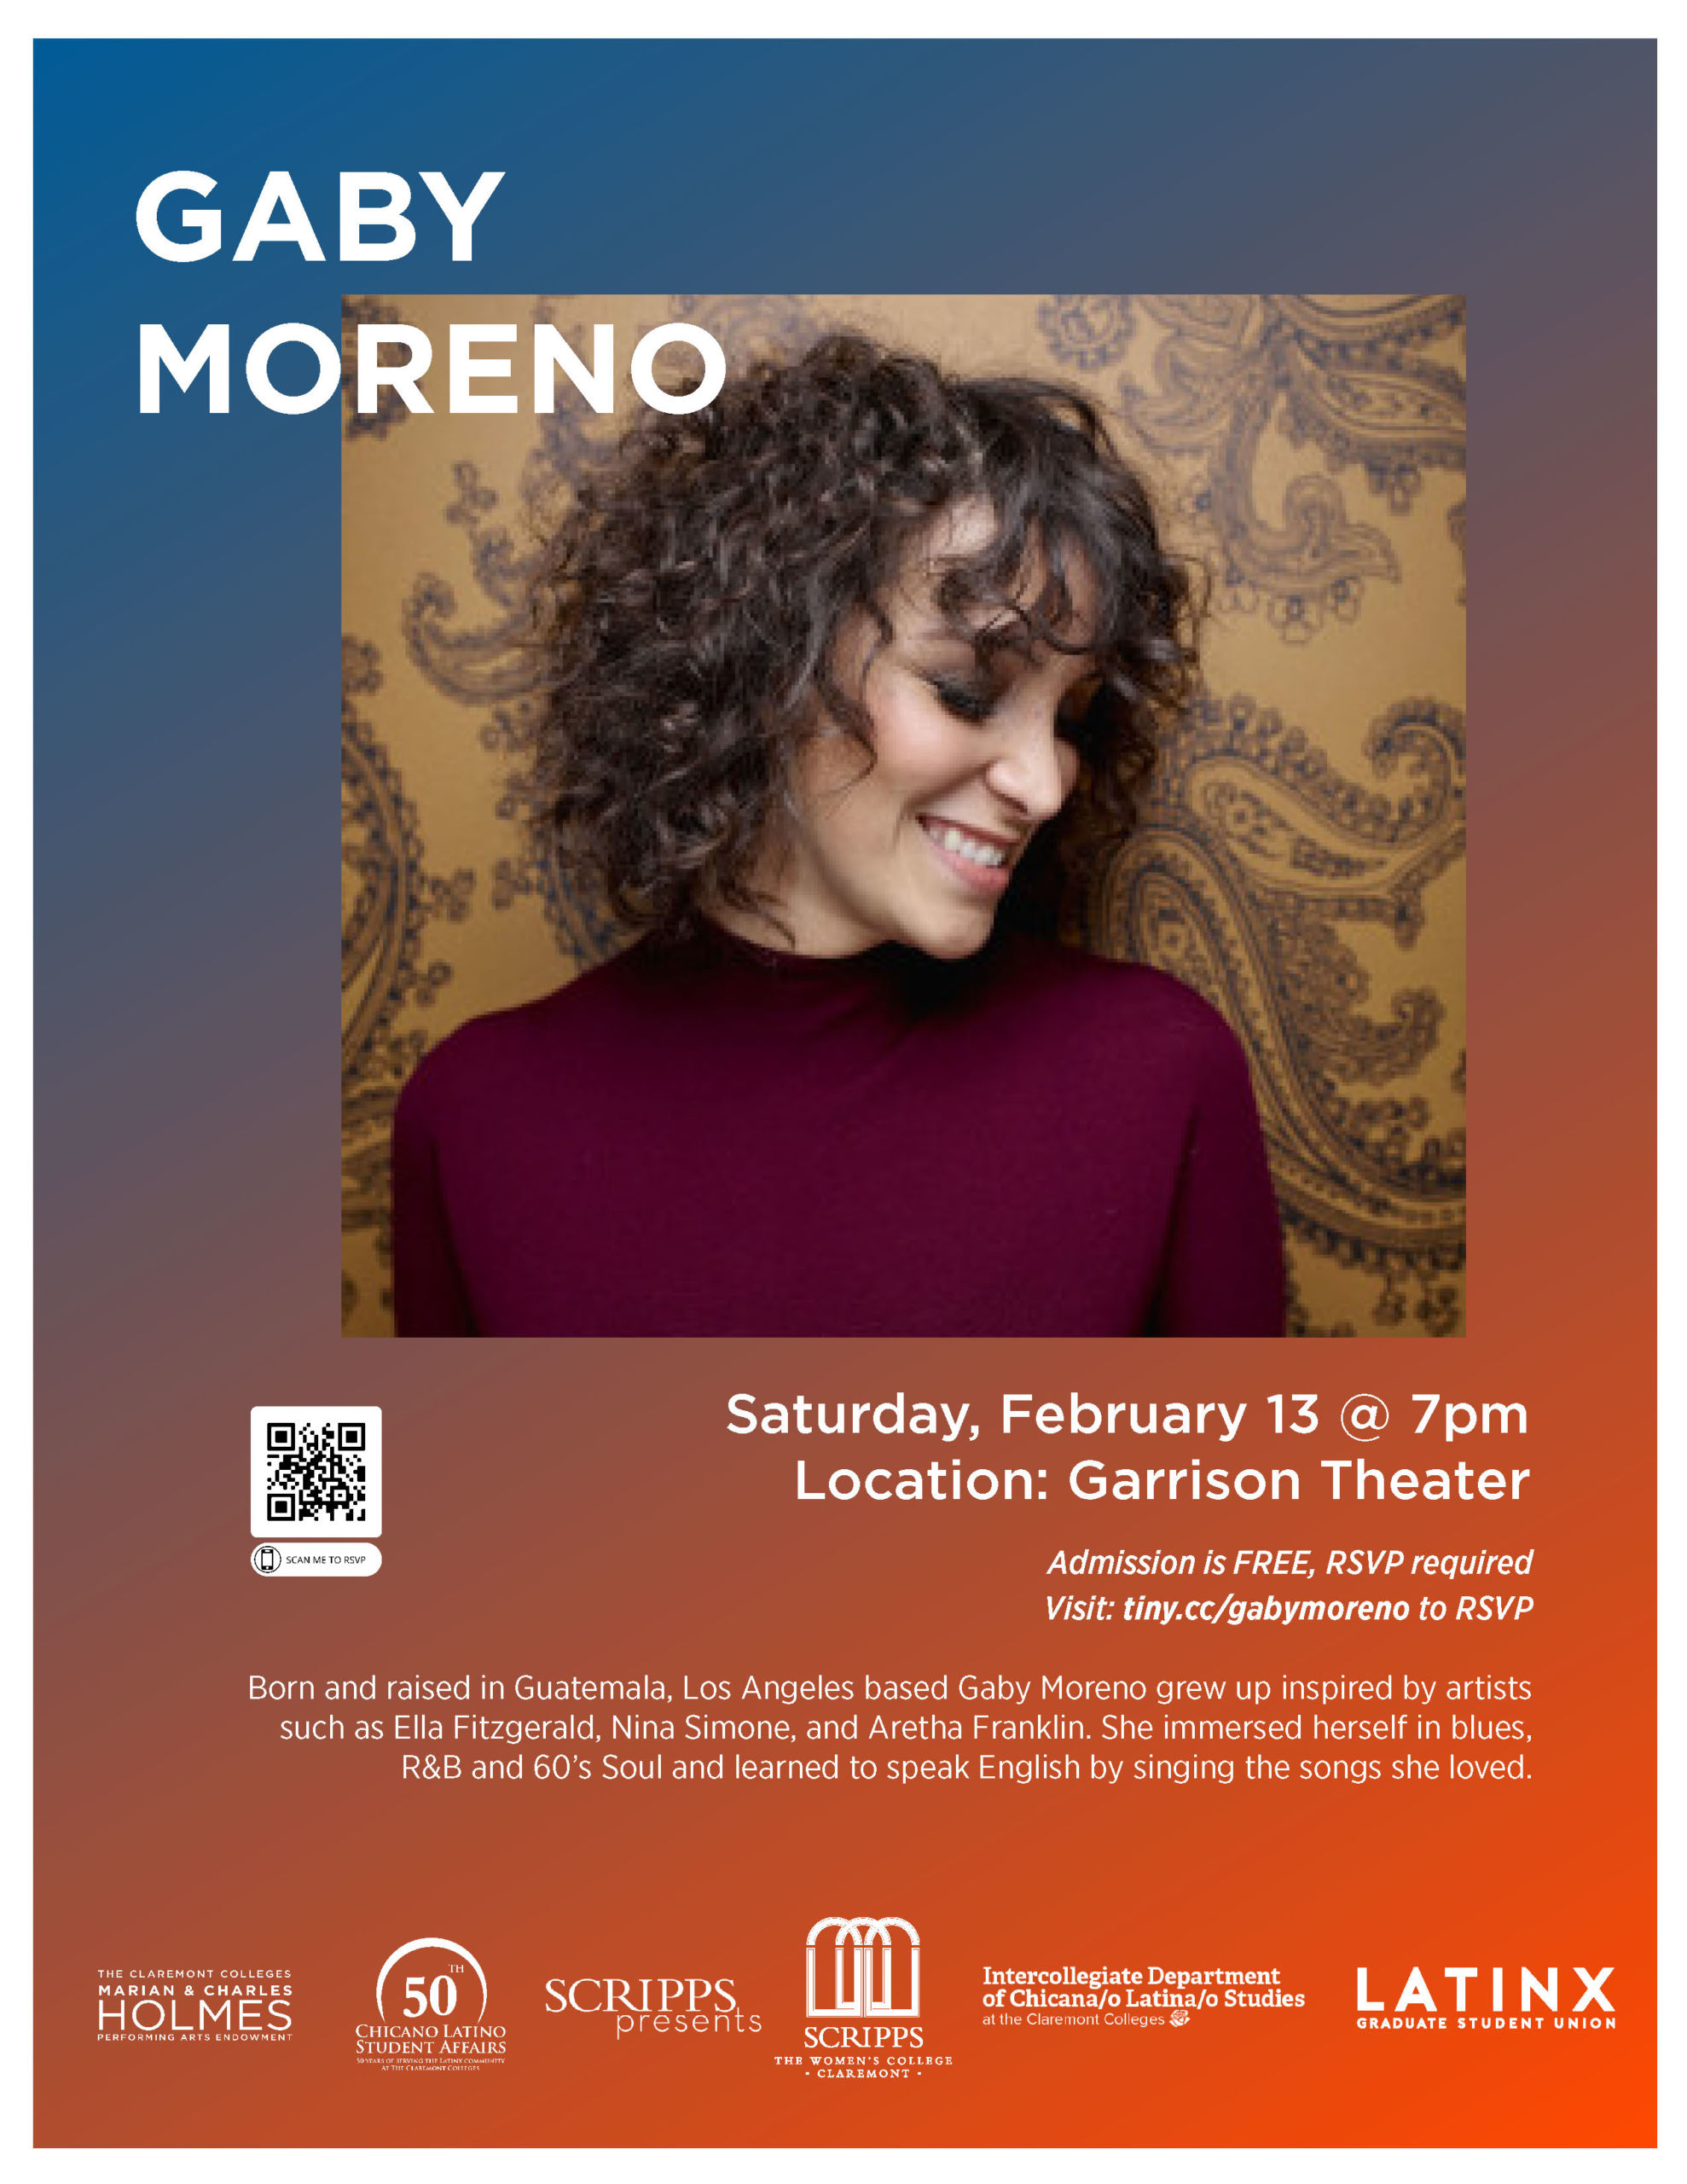 Gaby Moreno event poster